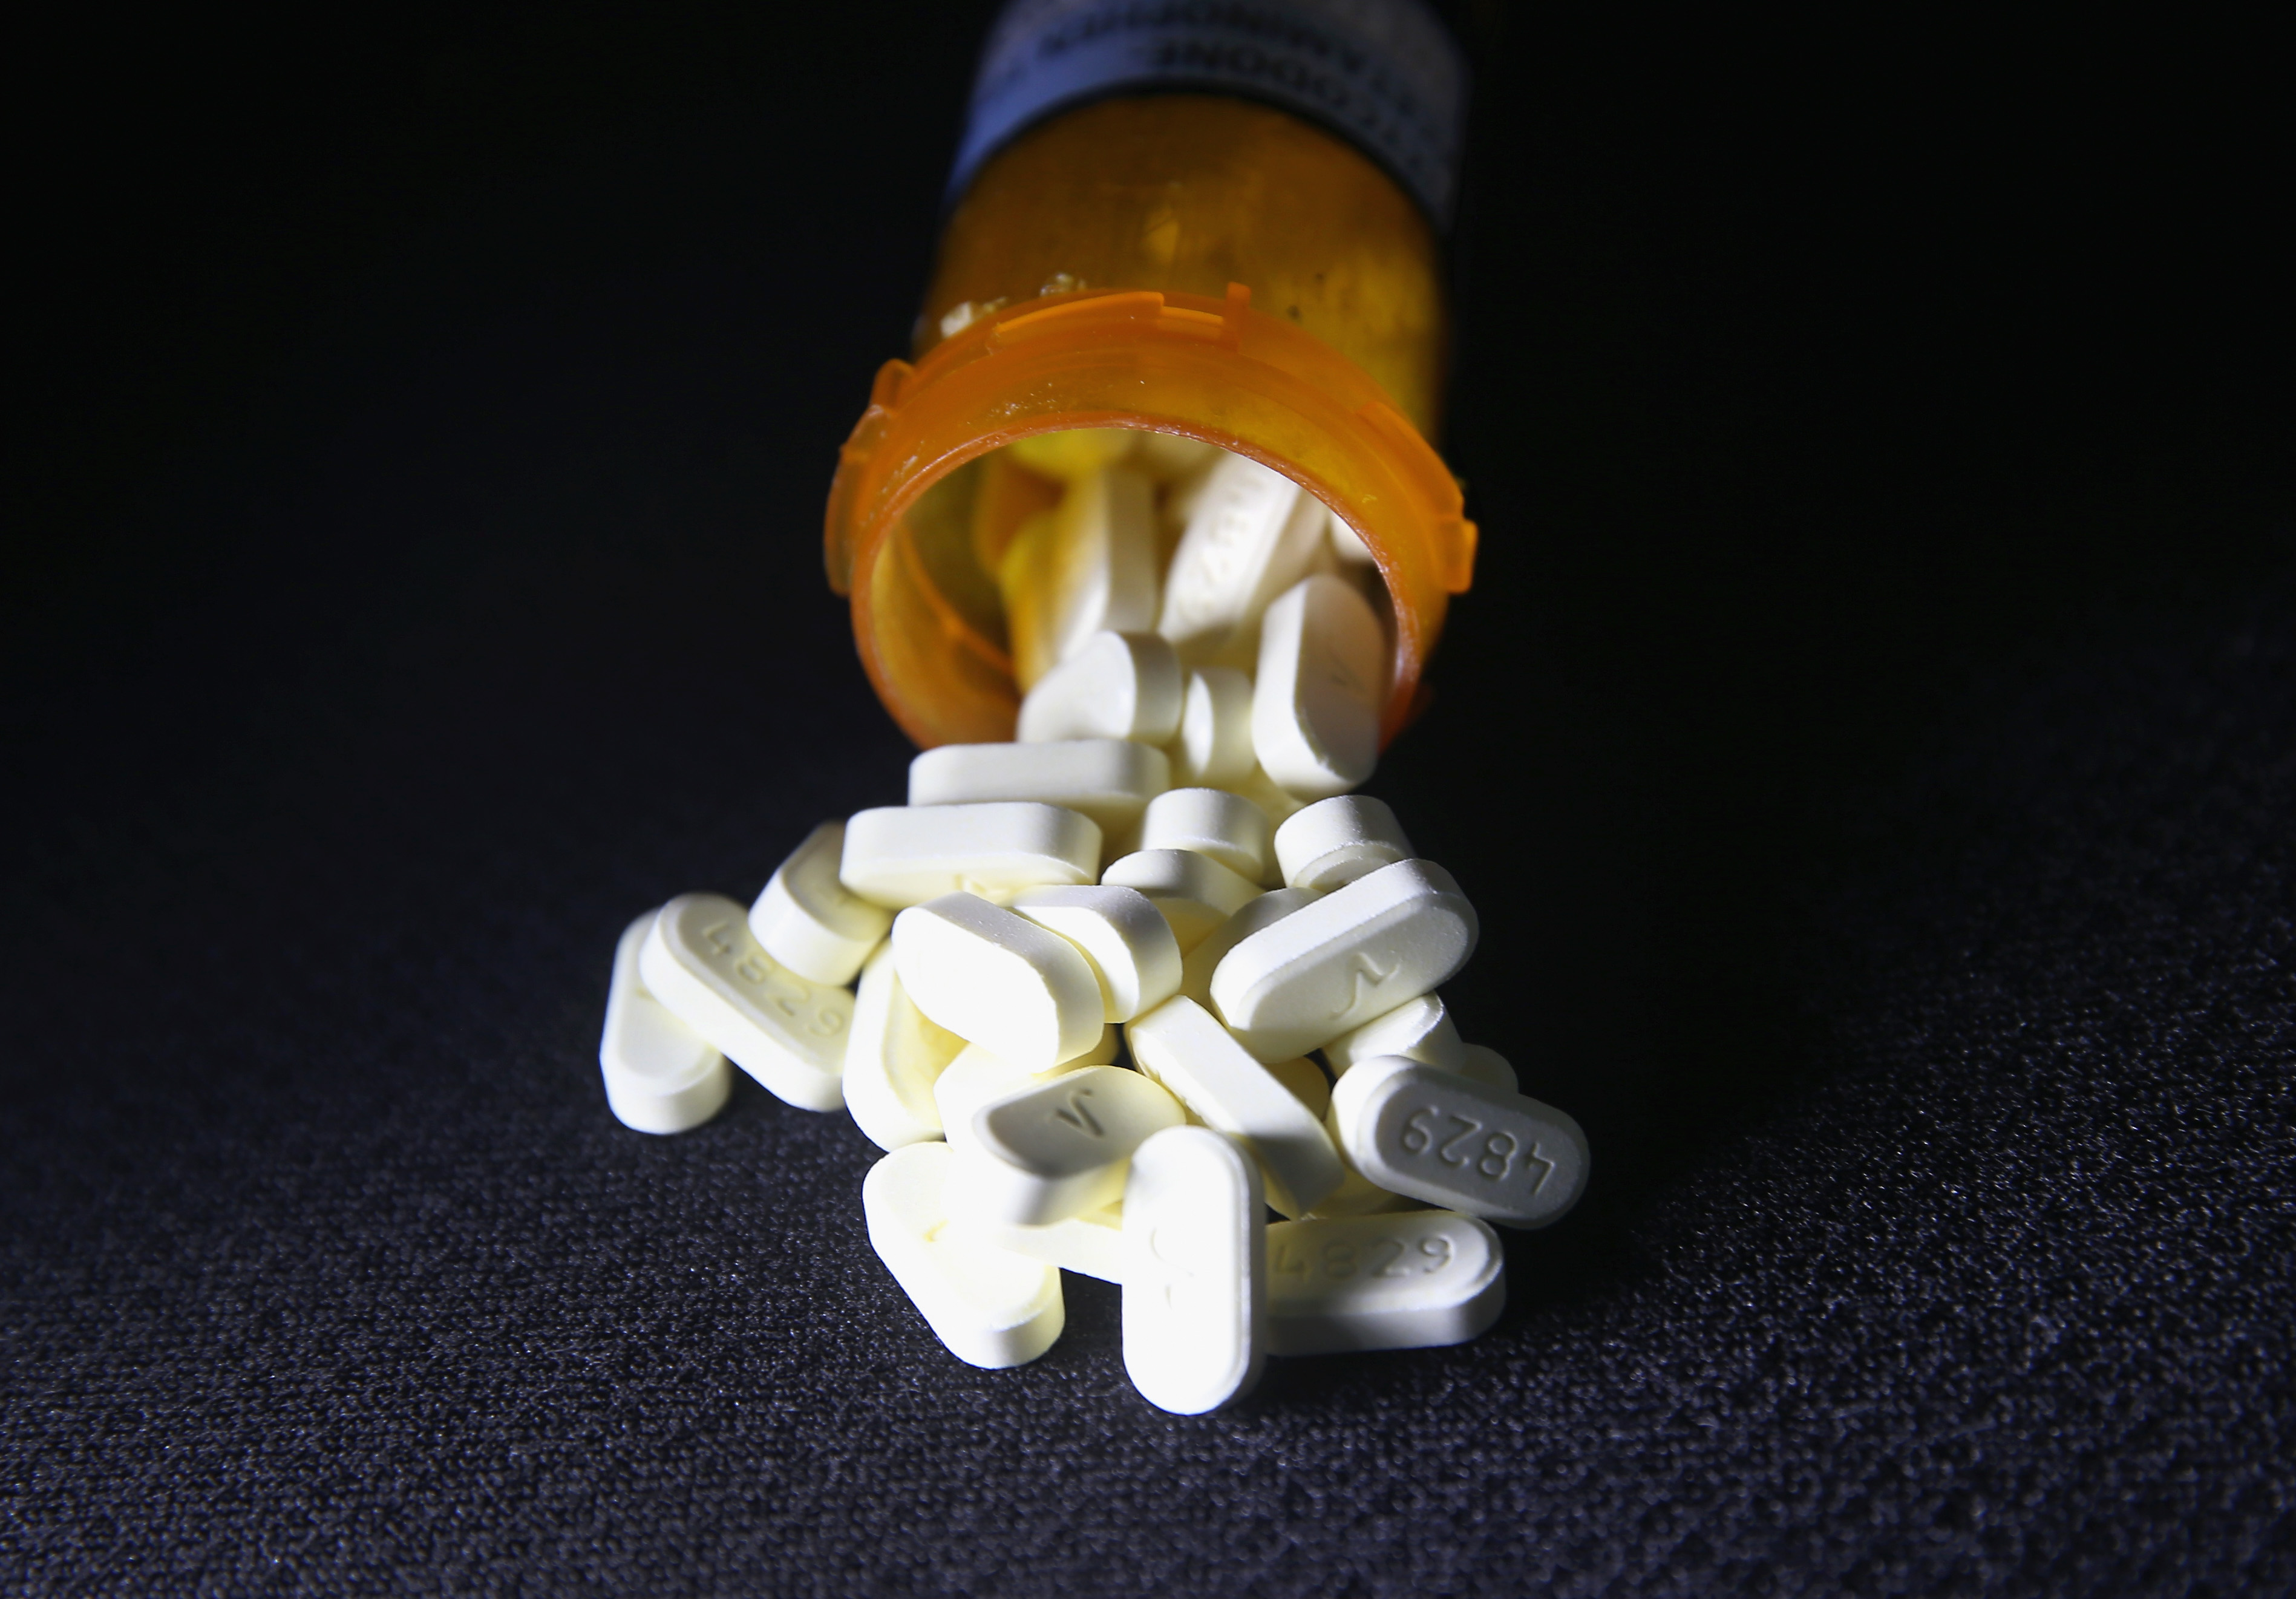 Cvs To Limit Opioid Drug Prescriptions Amid National Epidemic